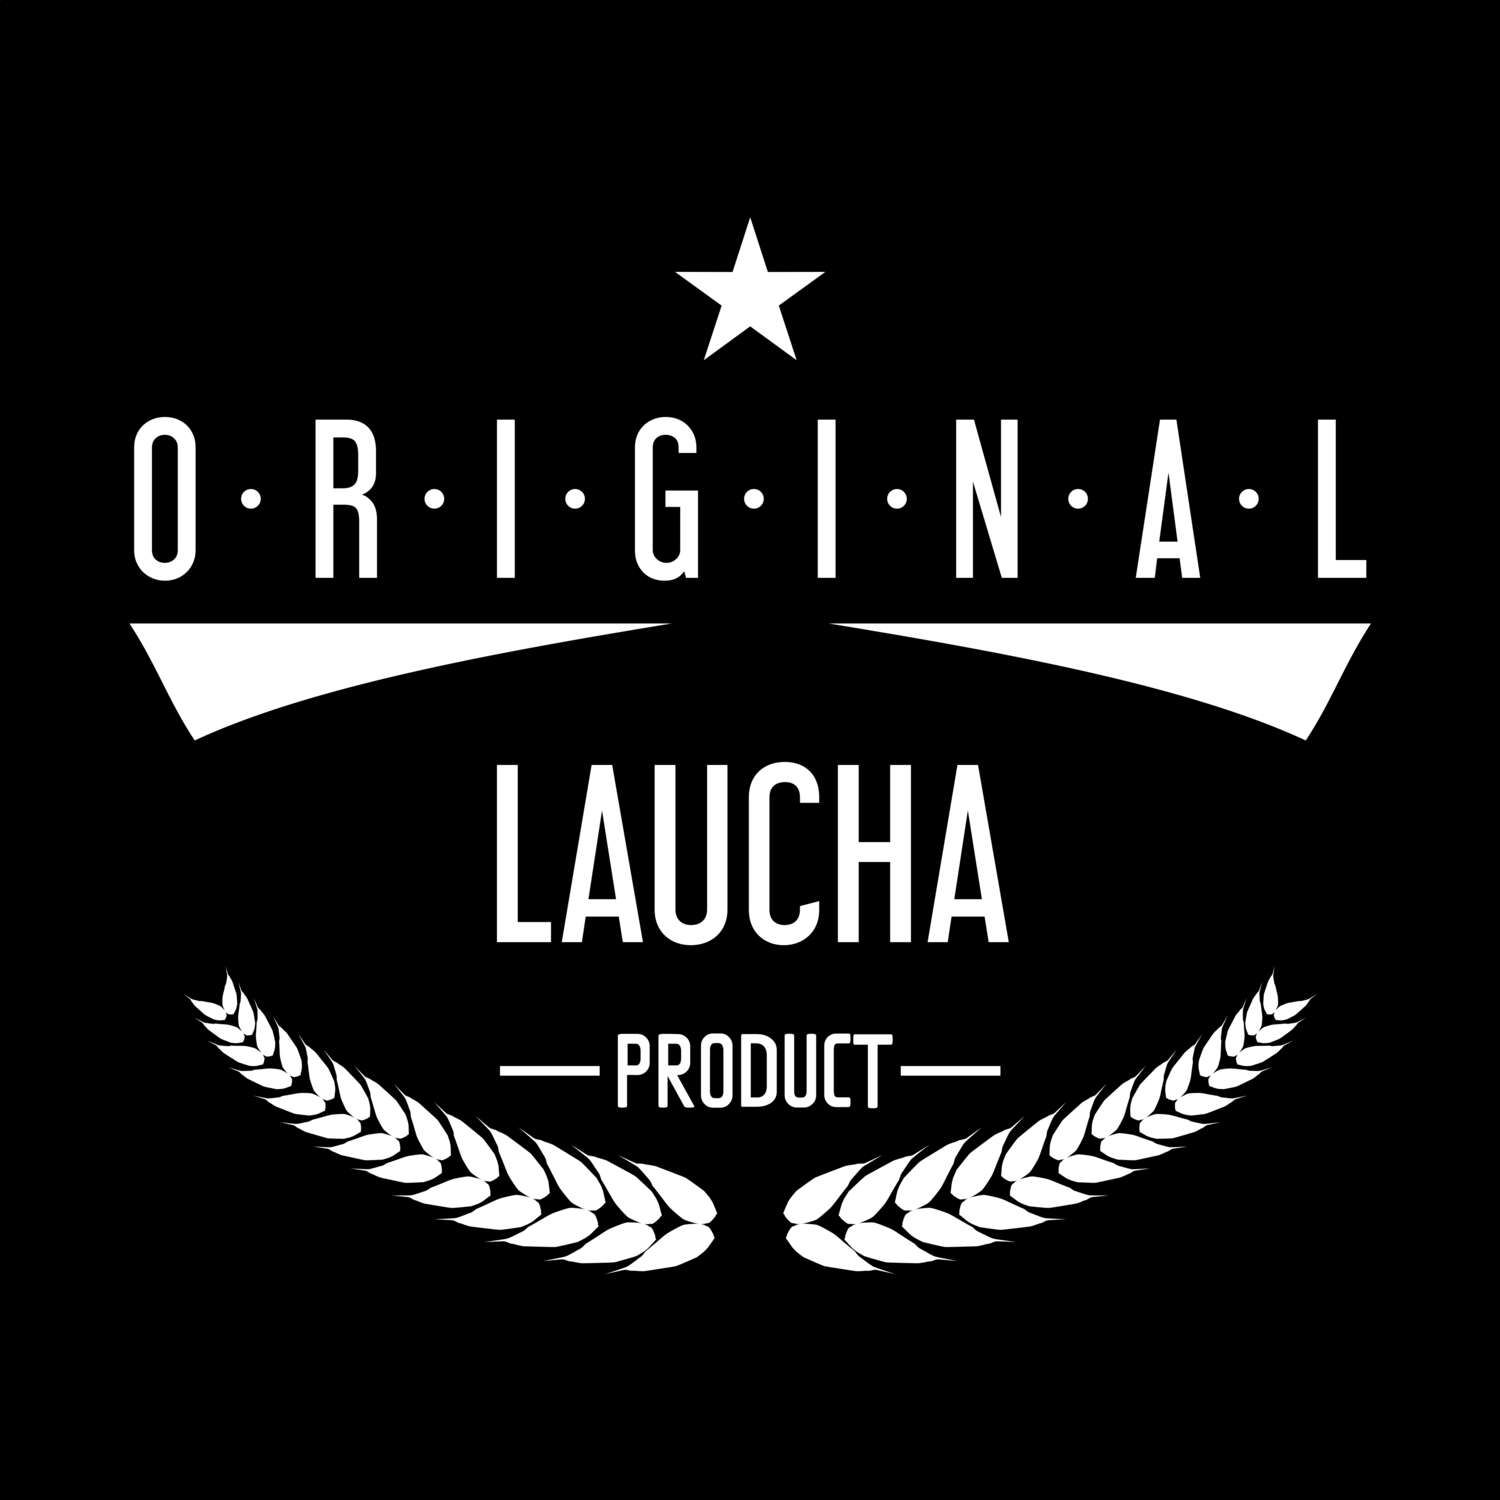 Laucha T-Shirt »Original Product«